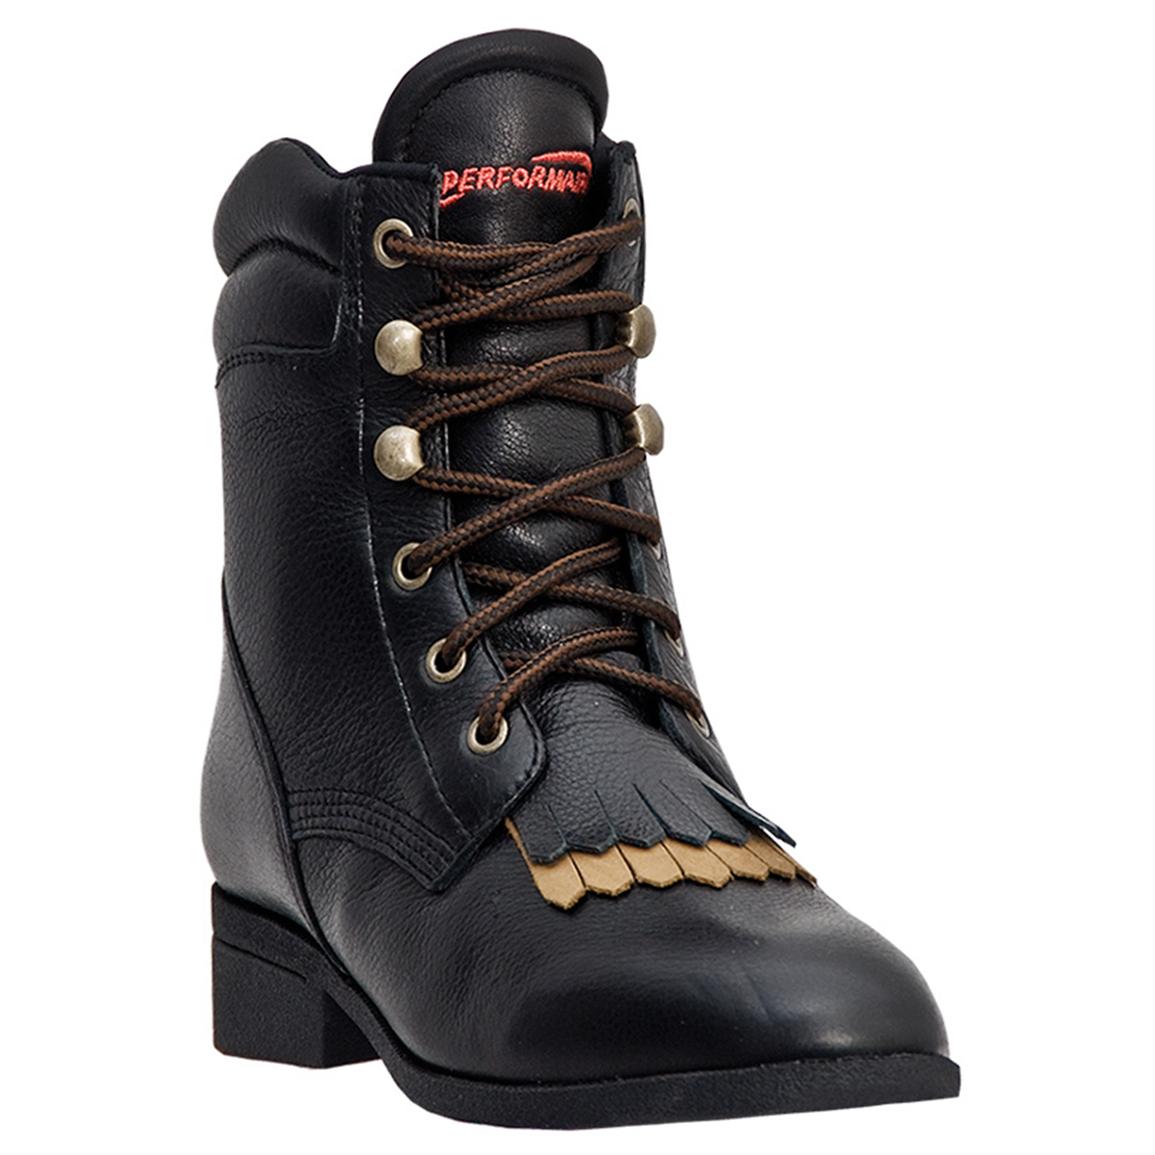 Performair Stepper Boots, Black 